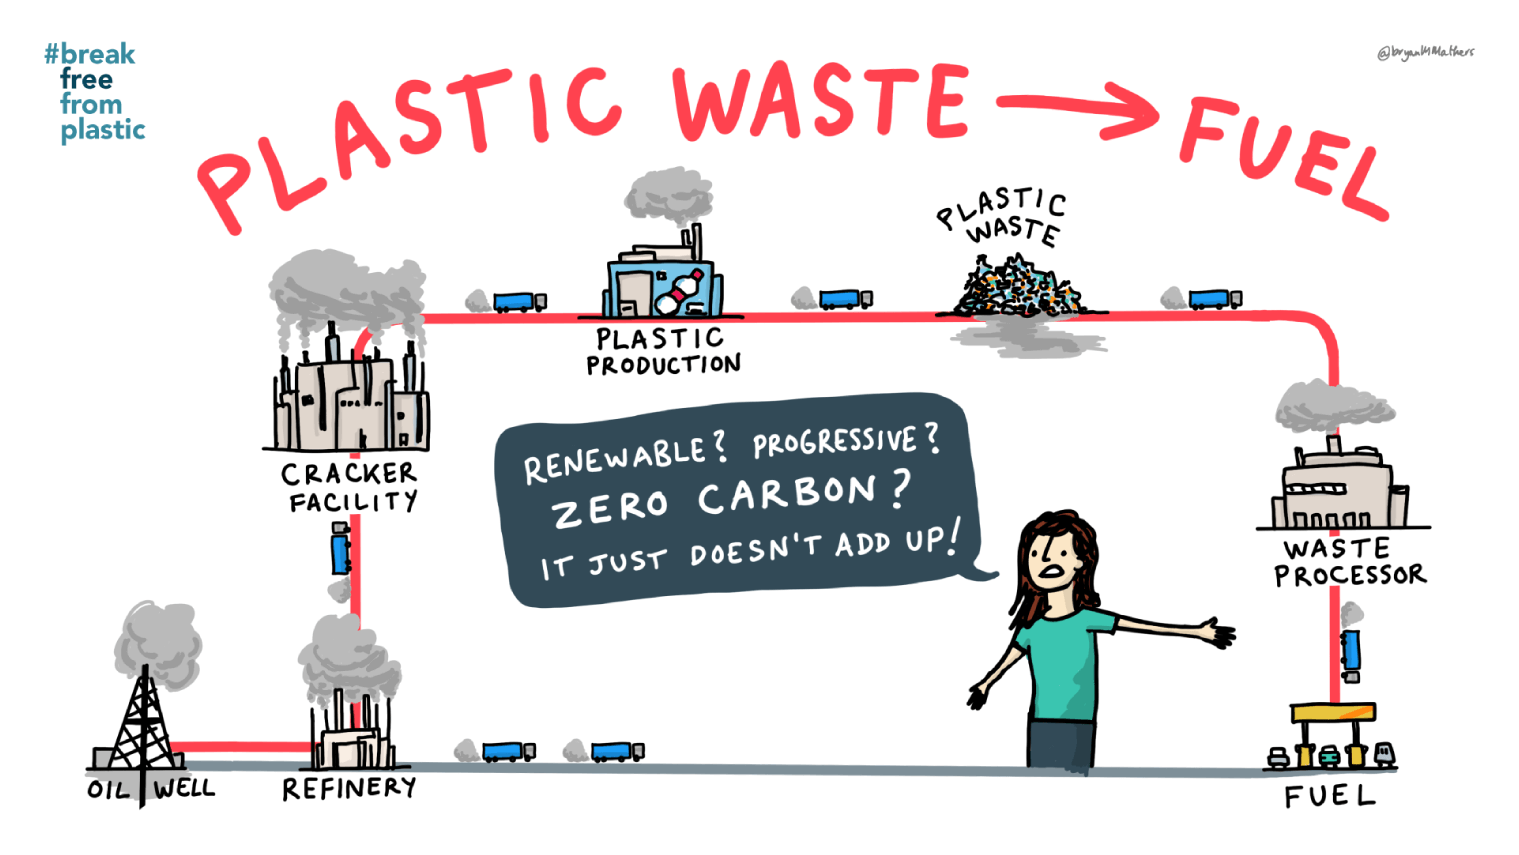 BFFP - Plastic Waste to Fuel